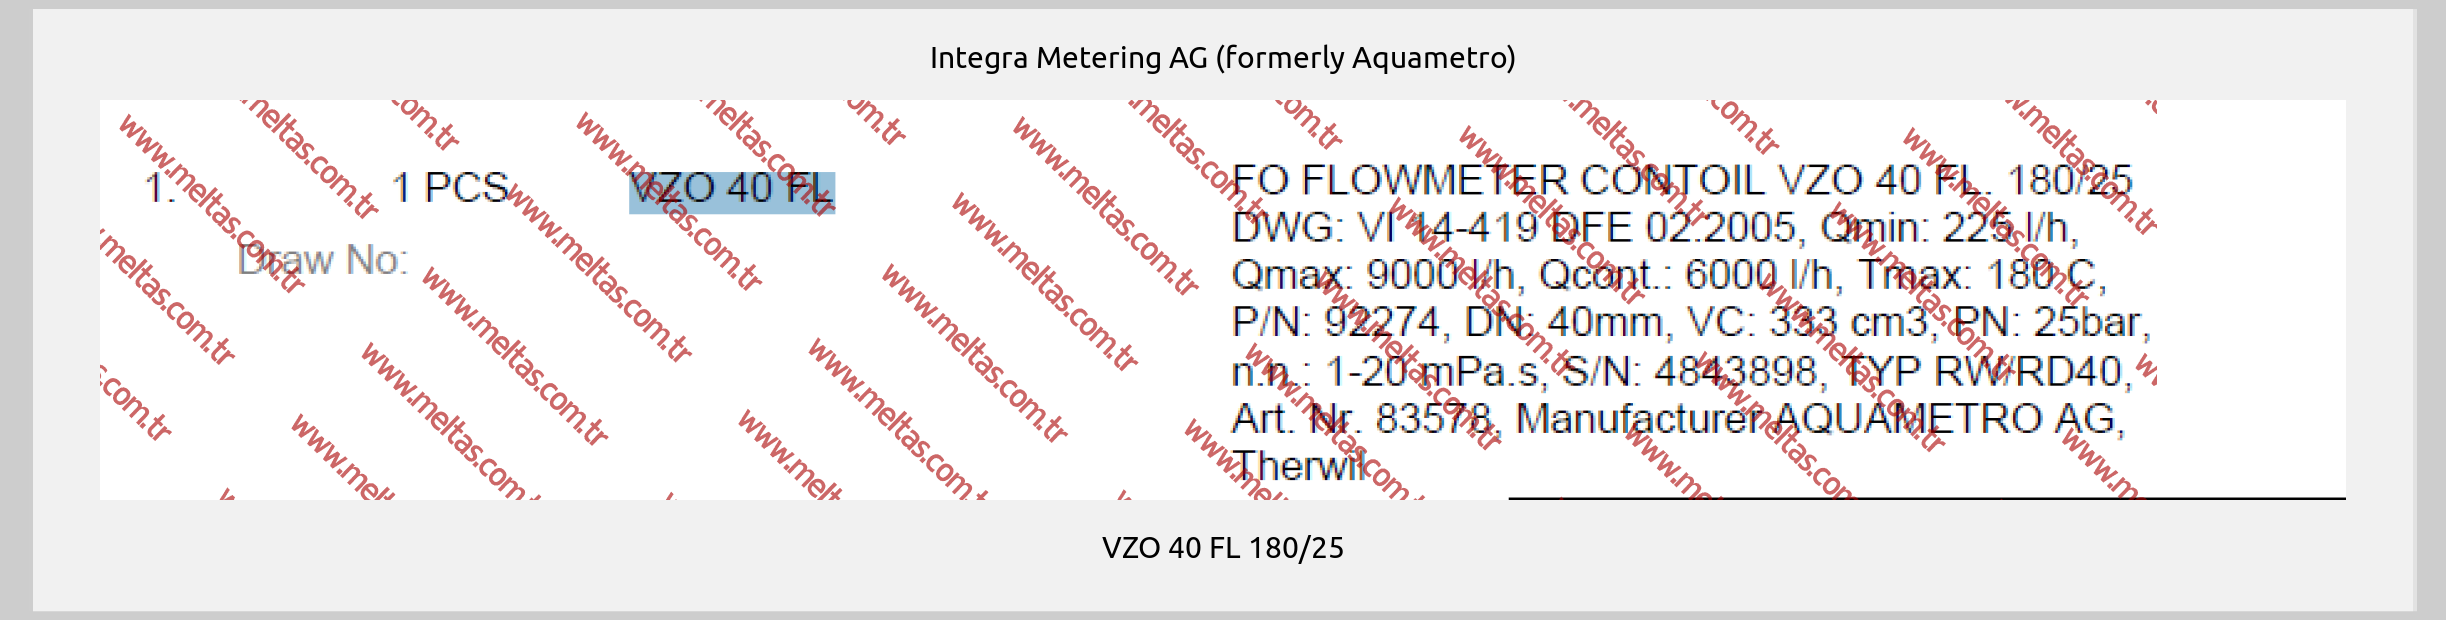 Integra Metering AG (formerly Aquametro) - VZO 40 FL 180/25